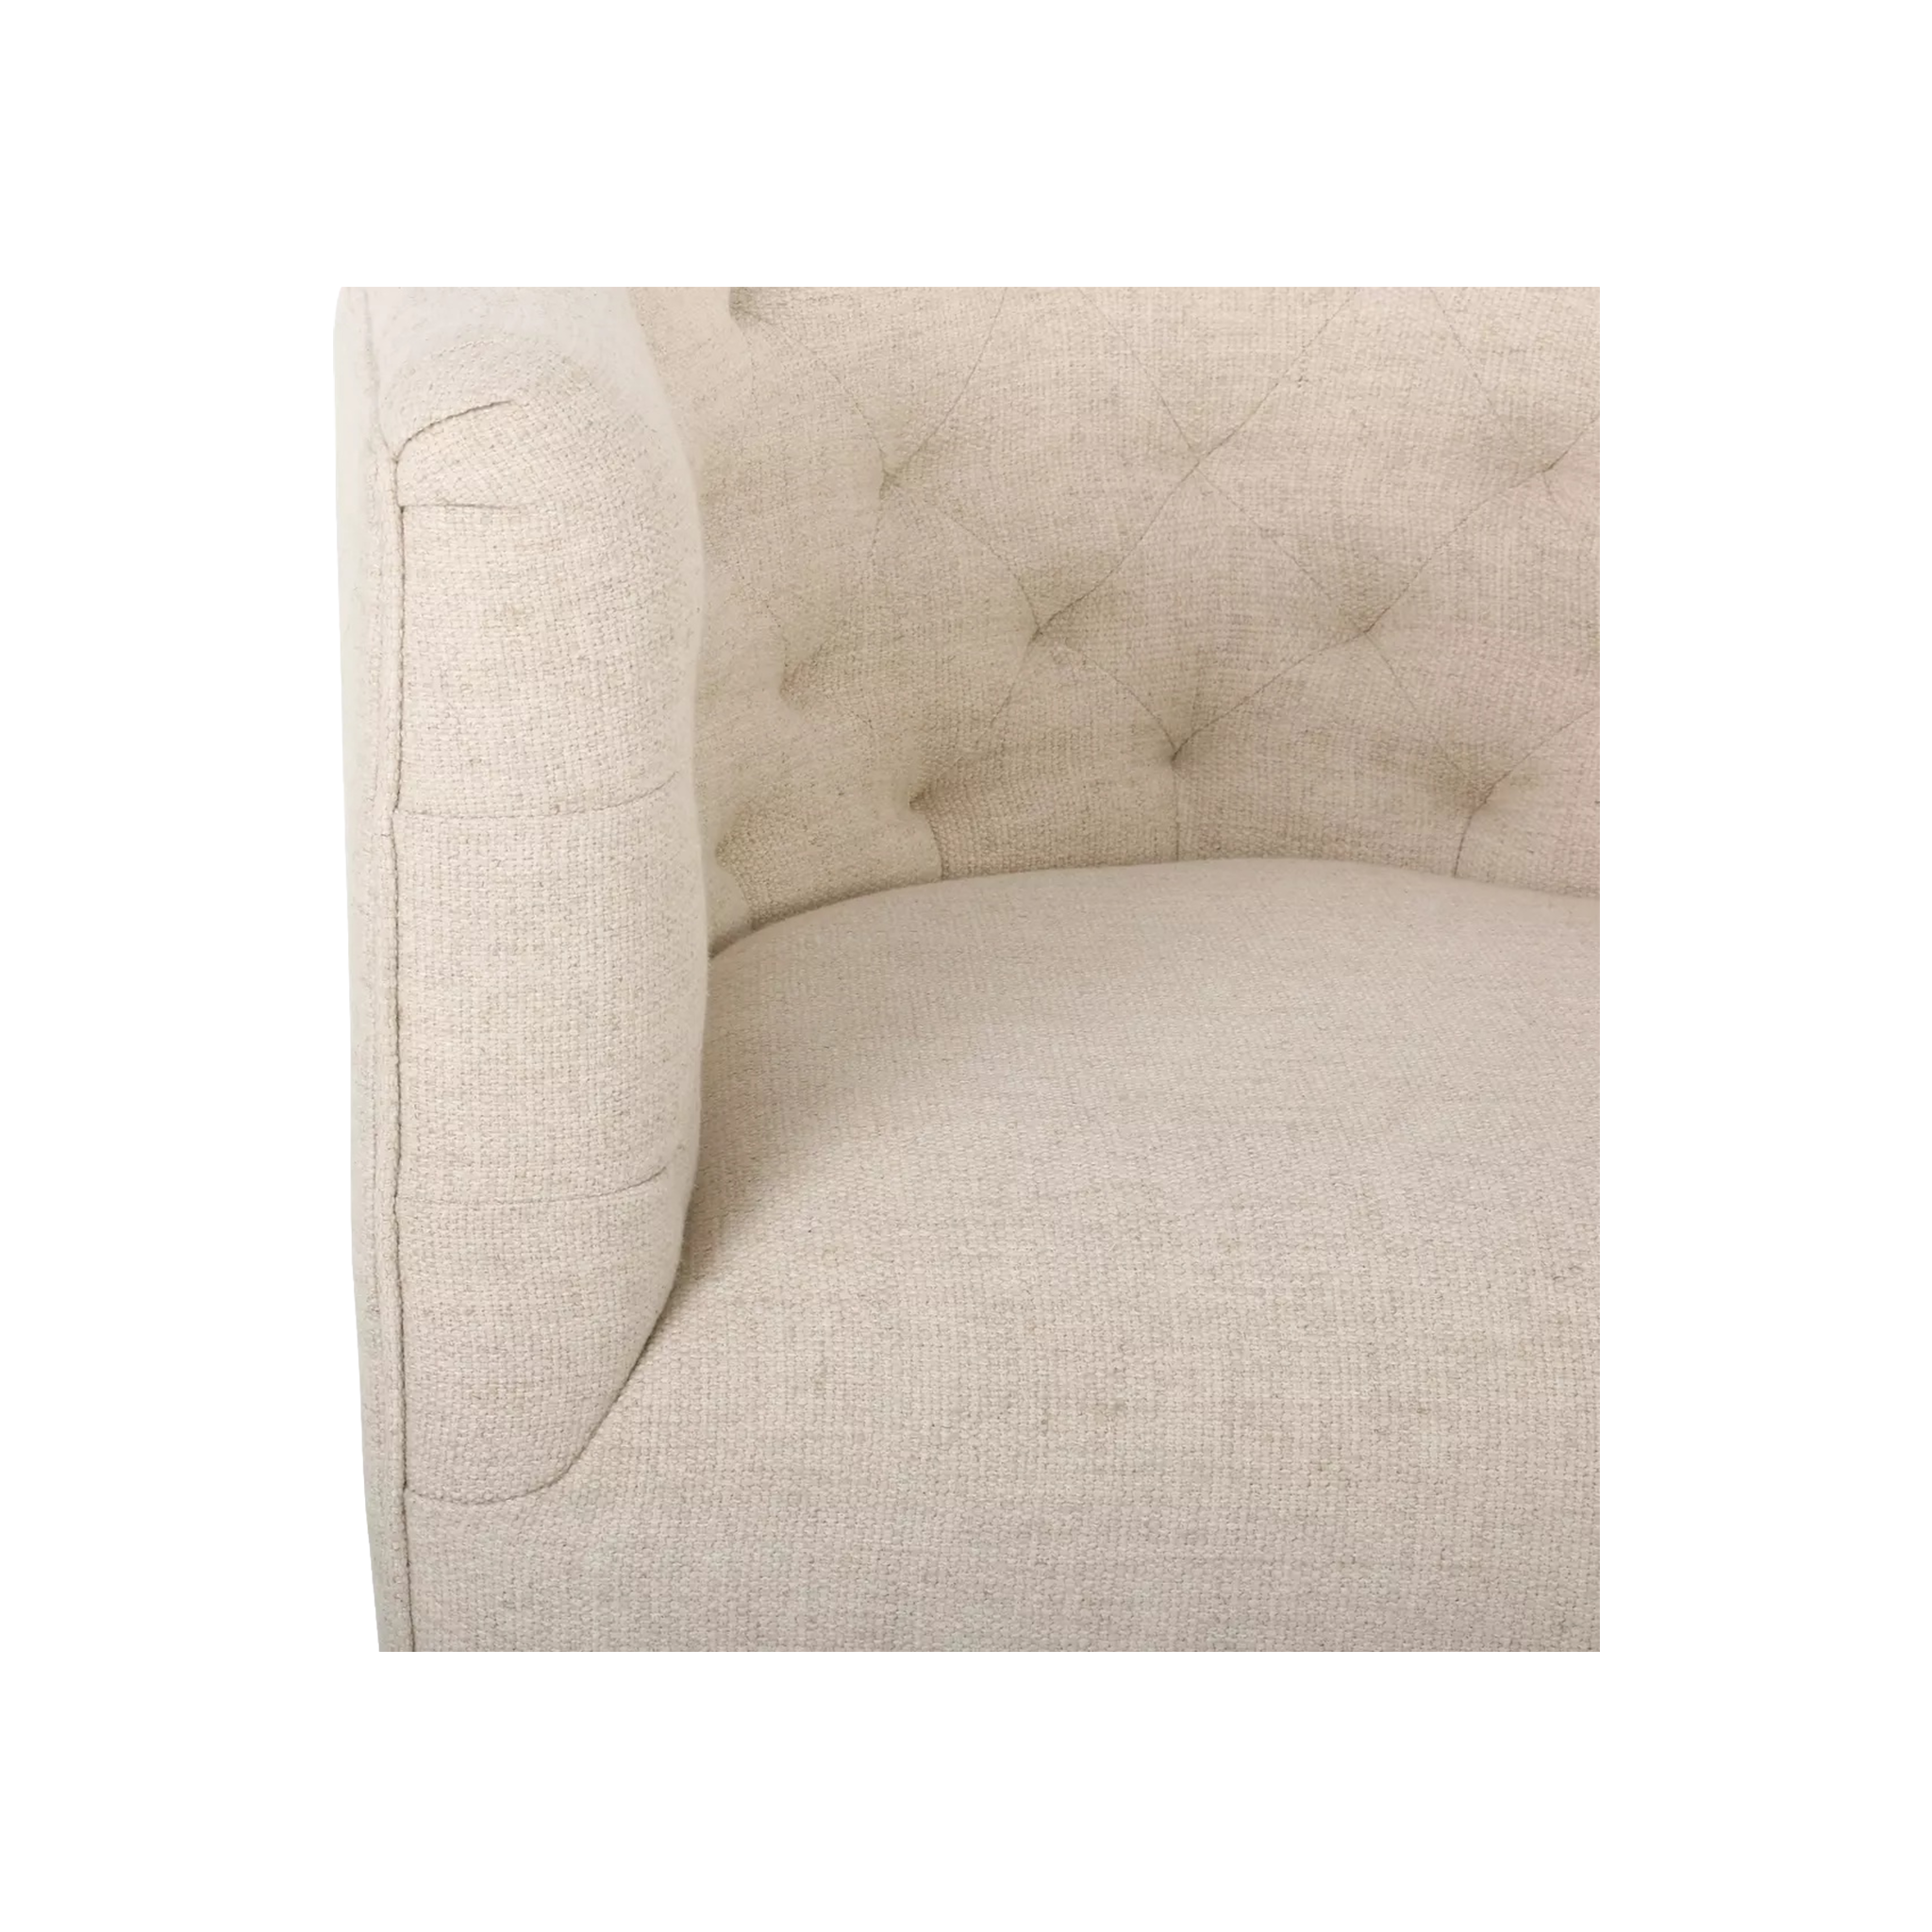 Hanover Swivel Chair (Cream)